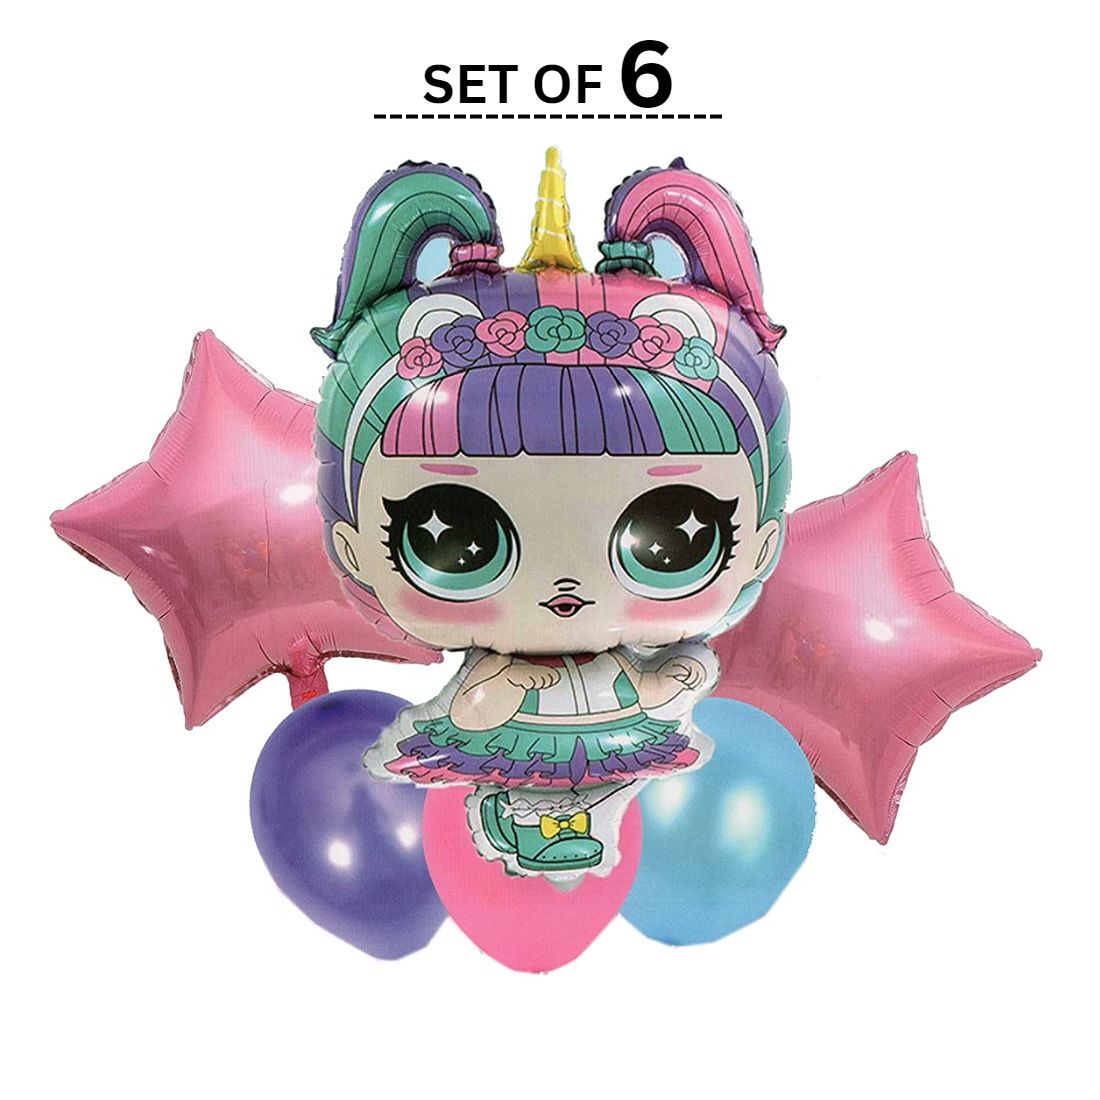 Lol Doll Cartoon Theme Foil Balloon 6 pc Set For Birthday Decoration Pink